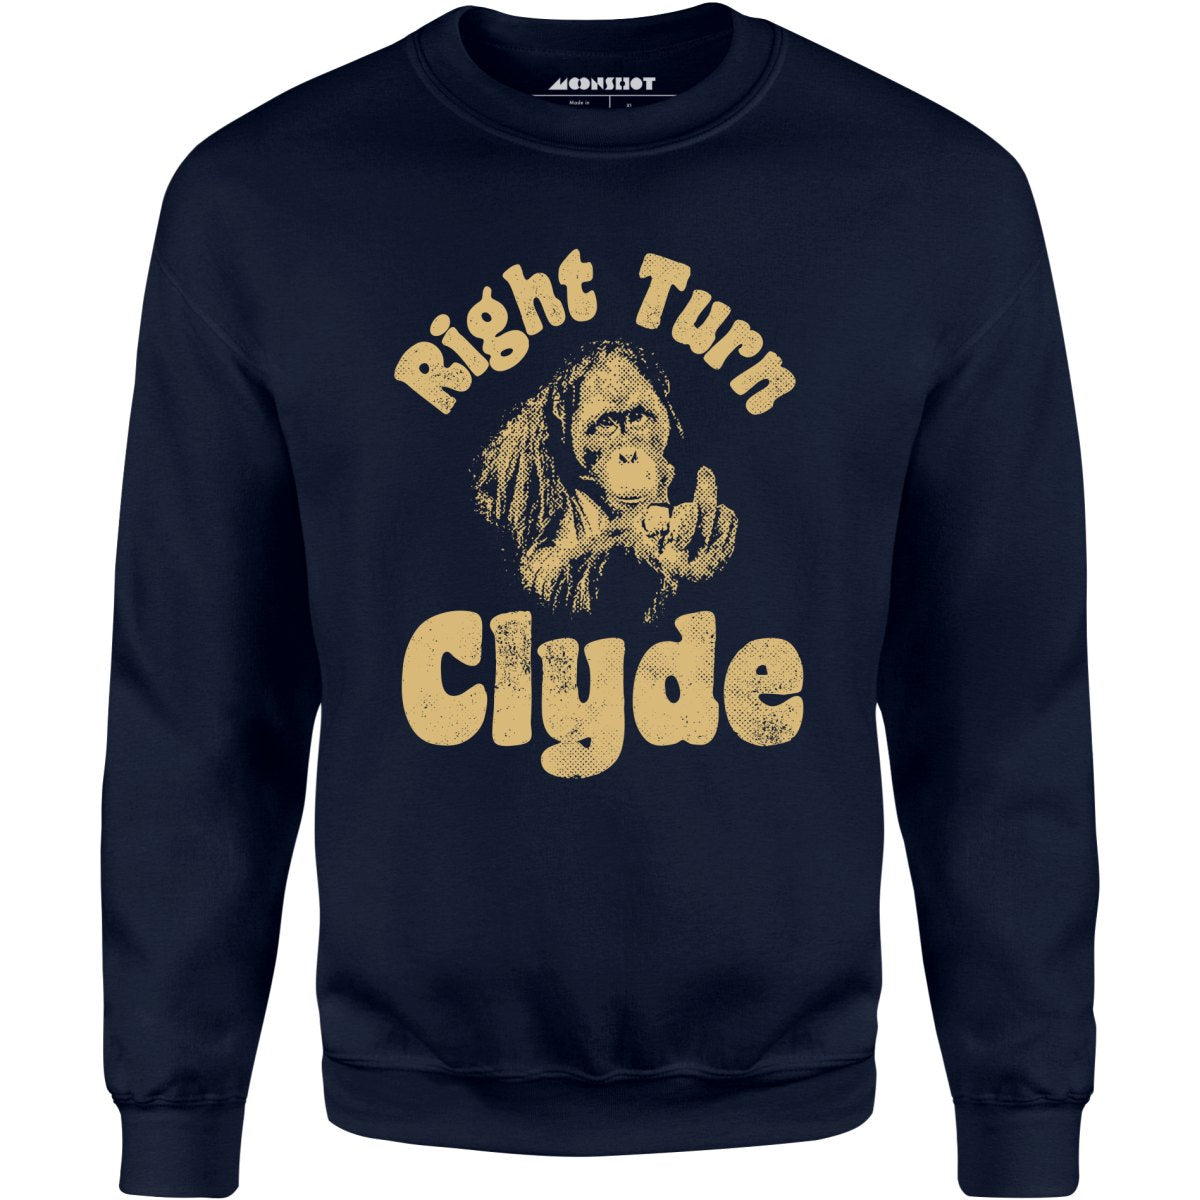 Right Turn Clyde - Unisex Sweatshirt